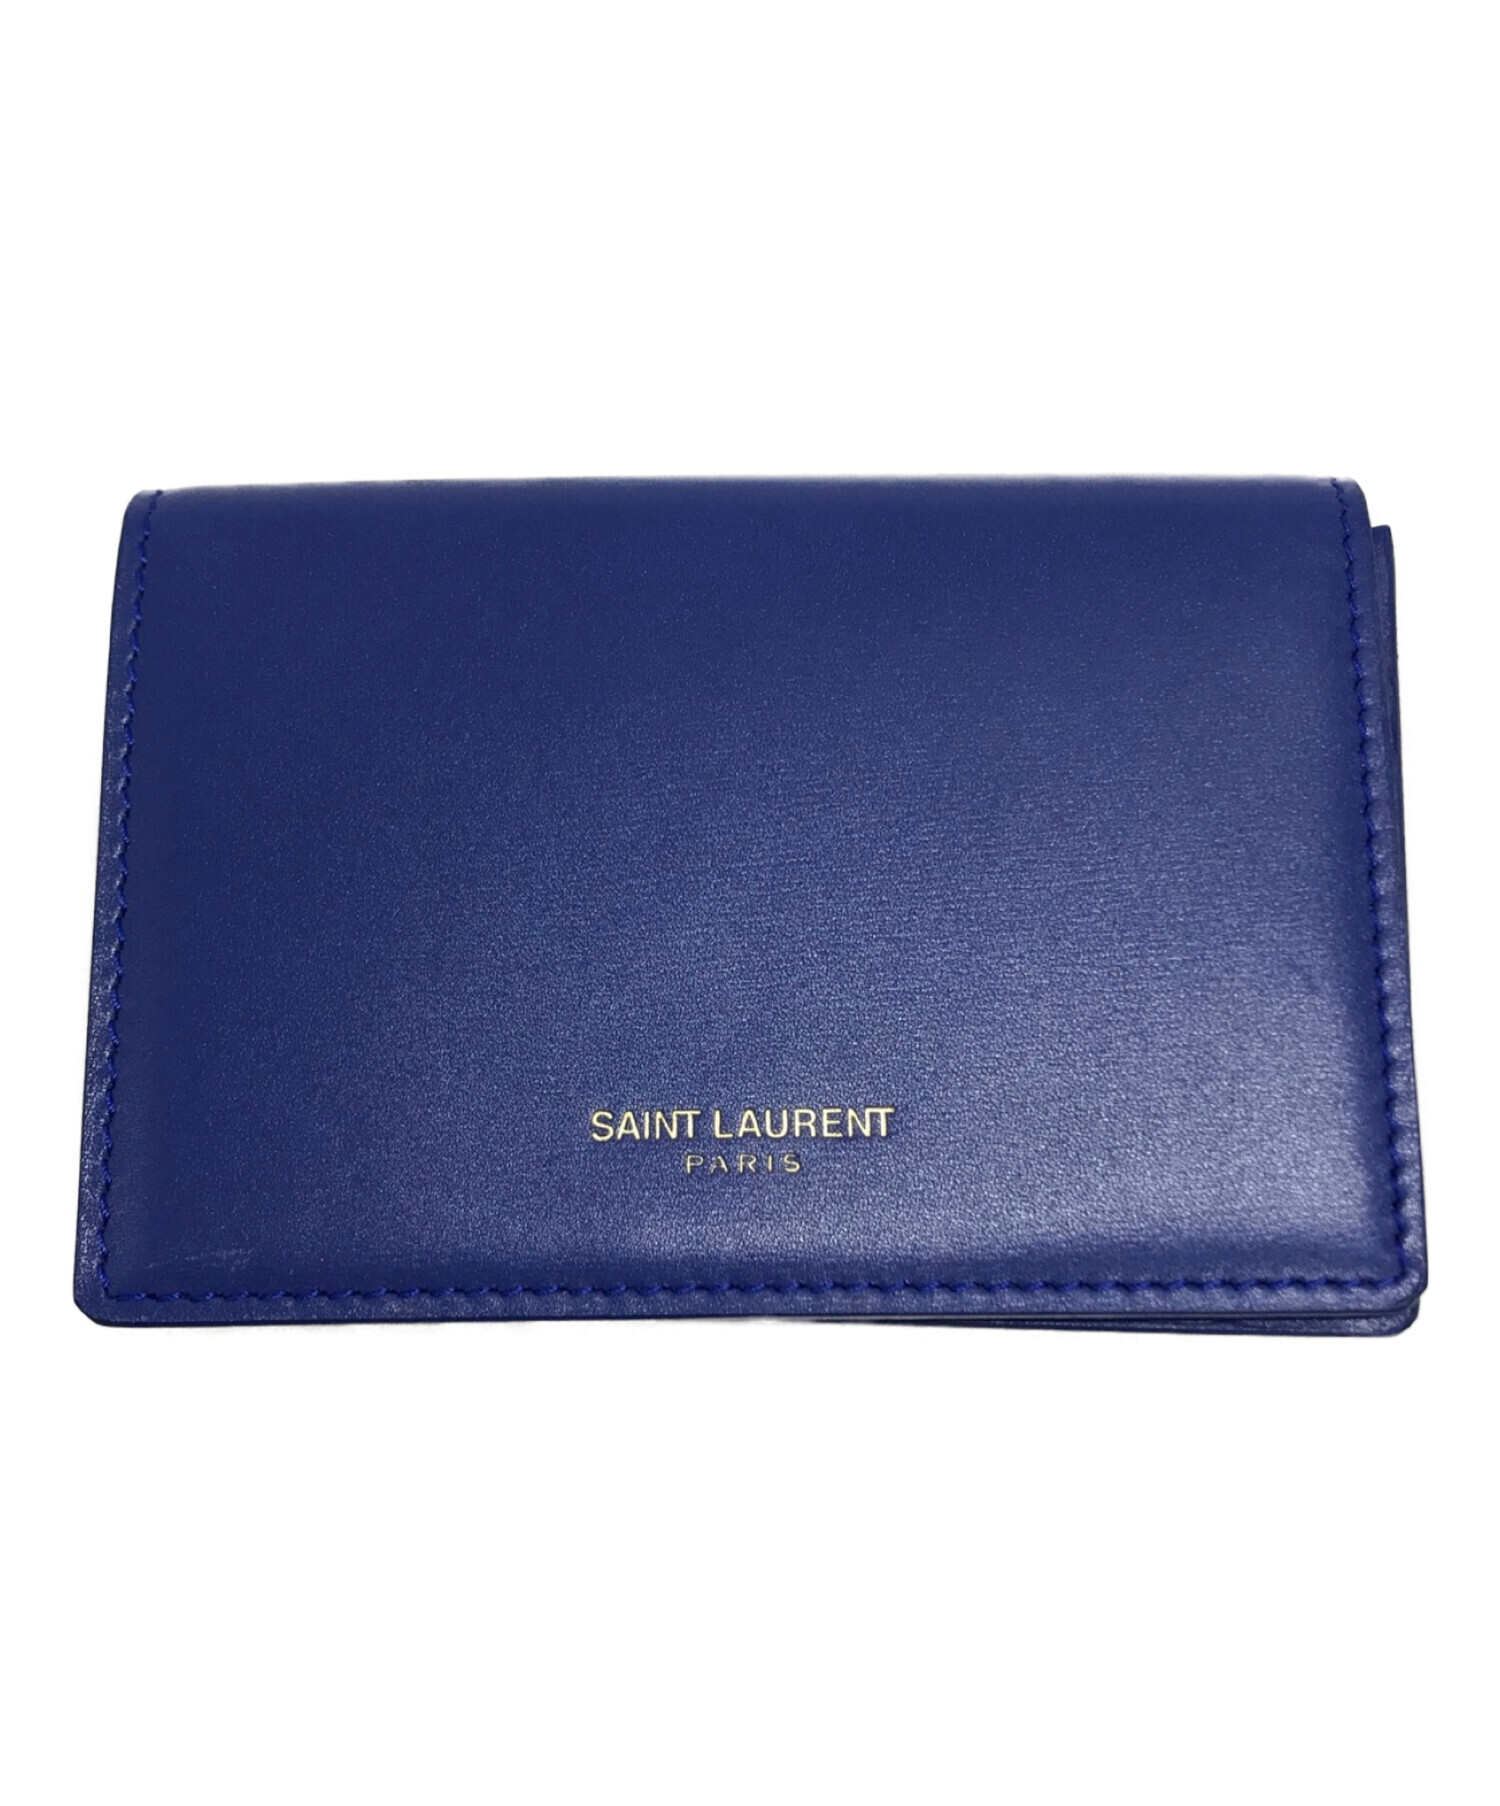 SAINT LAURENT サンローラン カードケース ブルーRIKOの財布